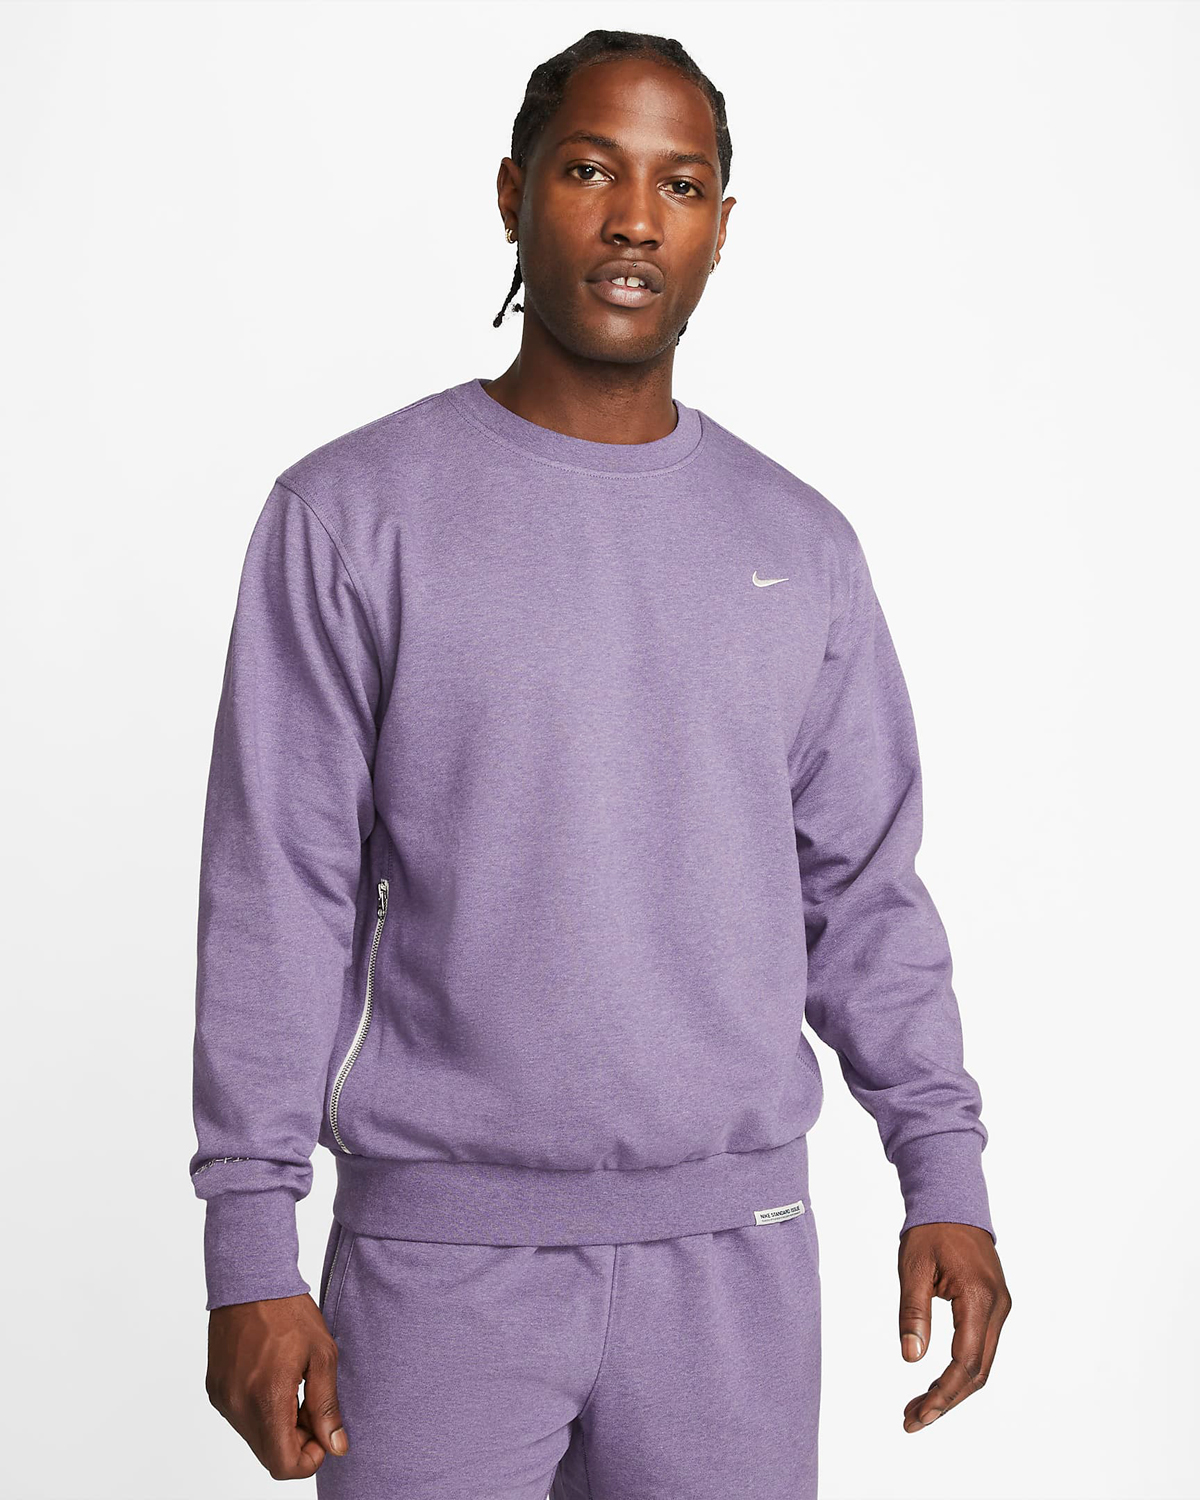 Nike-Standard-Issue-Sweatshirt-Canyon-Purple